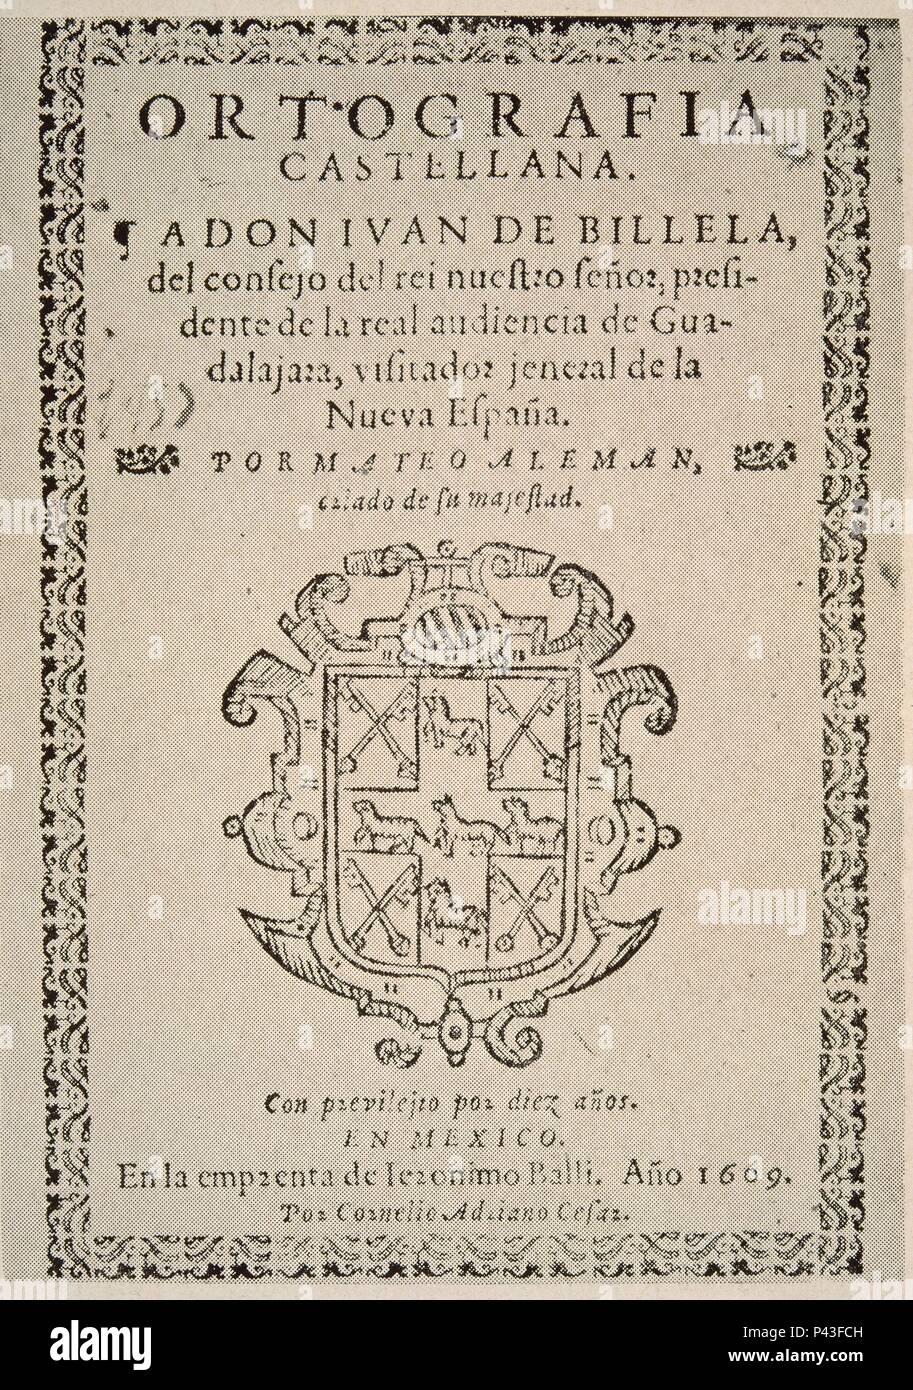 ORTOGRAFIA castellana en 1609. Autor: Aleman, Mateo. Foto de stock